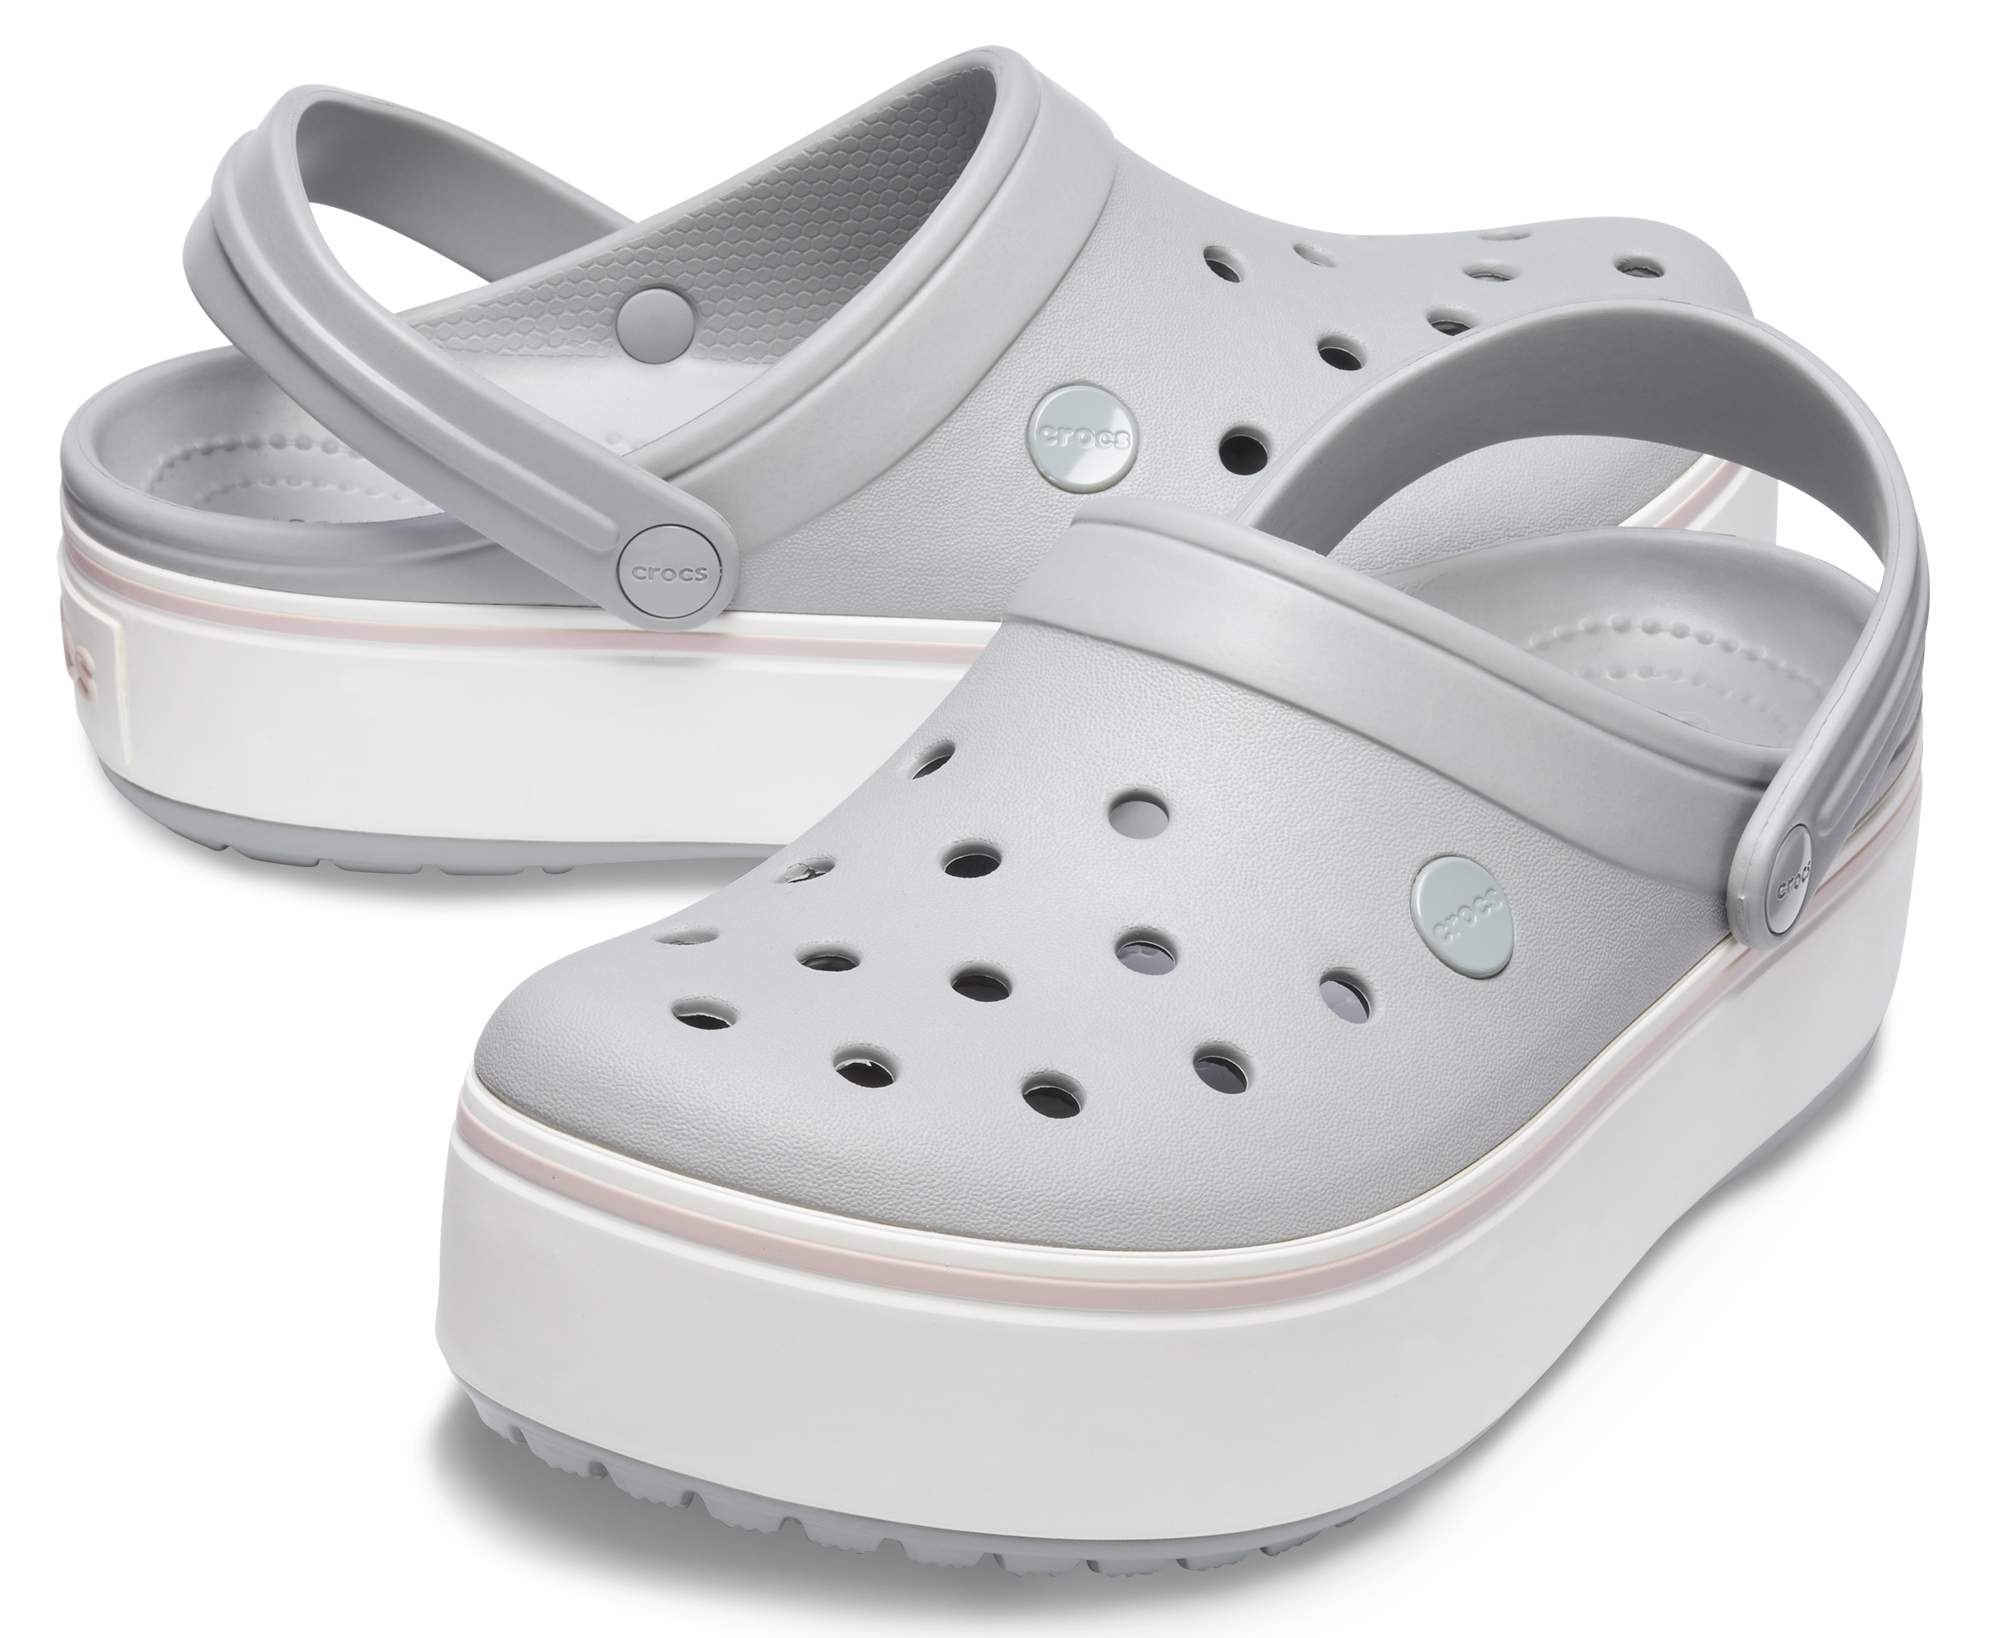 white and gray crocs